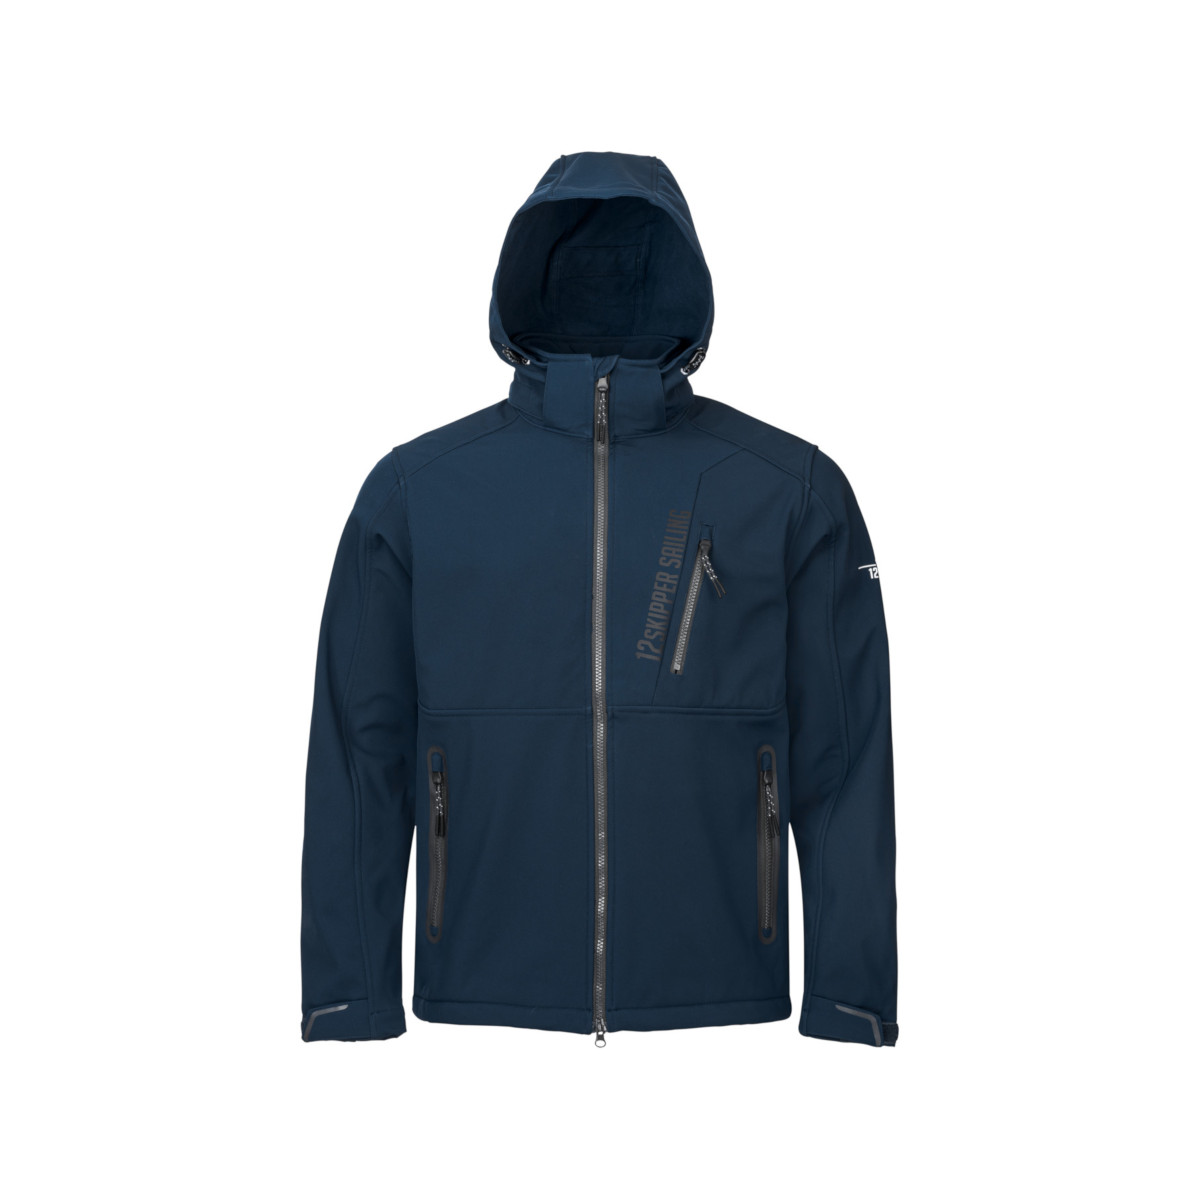 12skipper Amundsen veste softshell unisexe - bleu marine, taille S